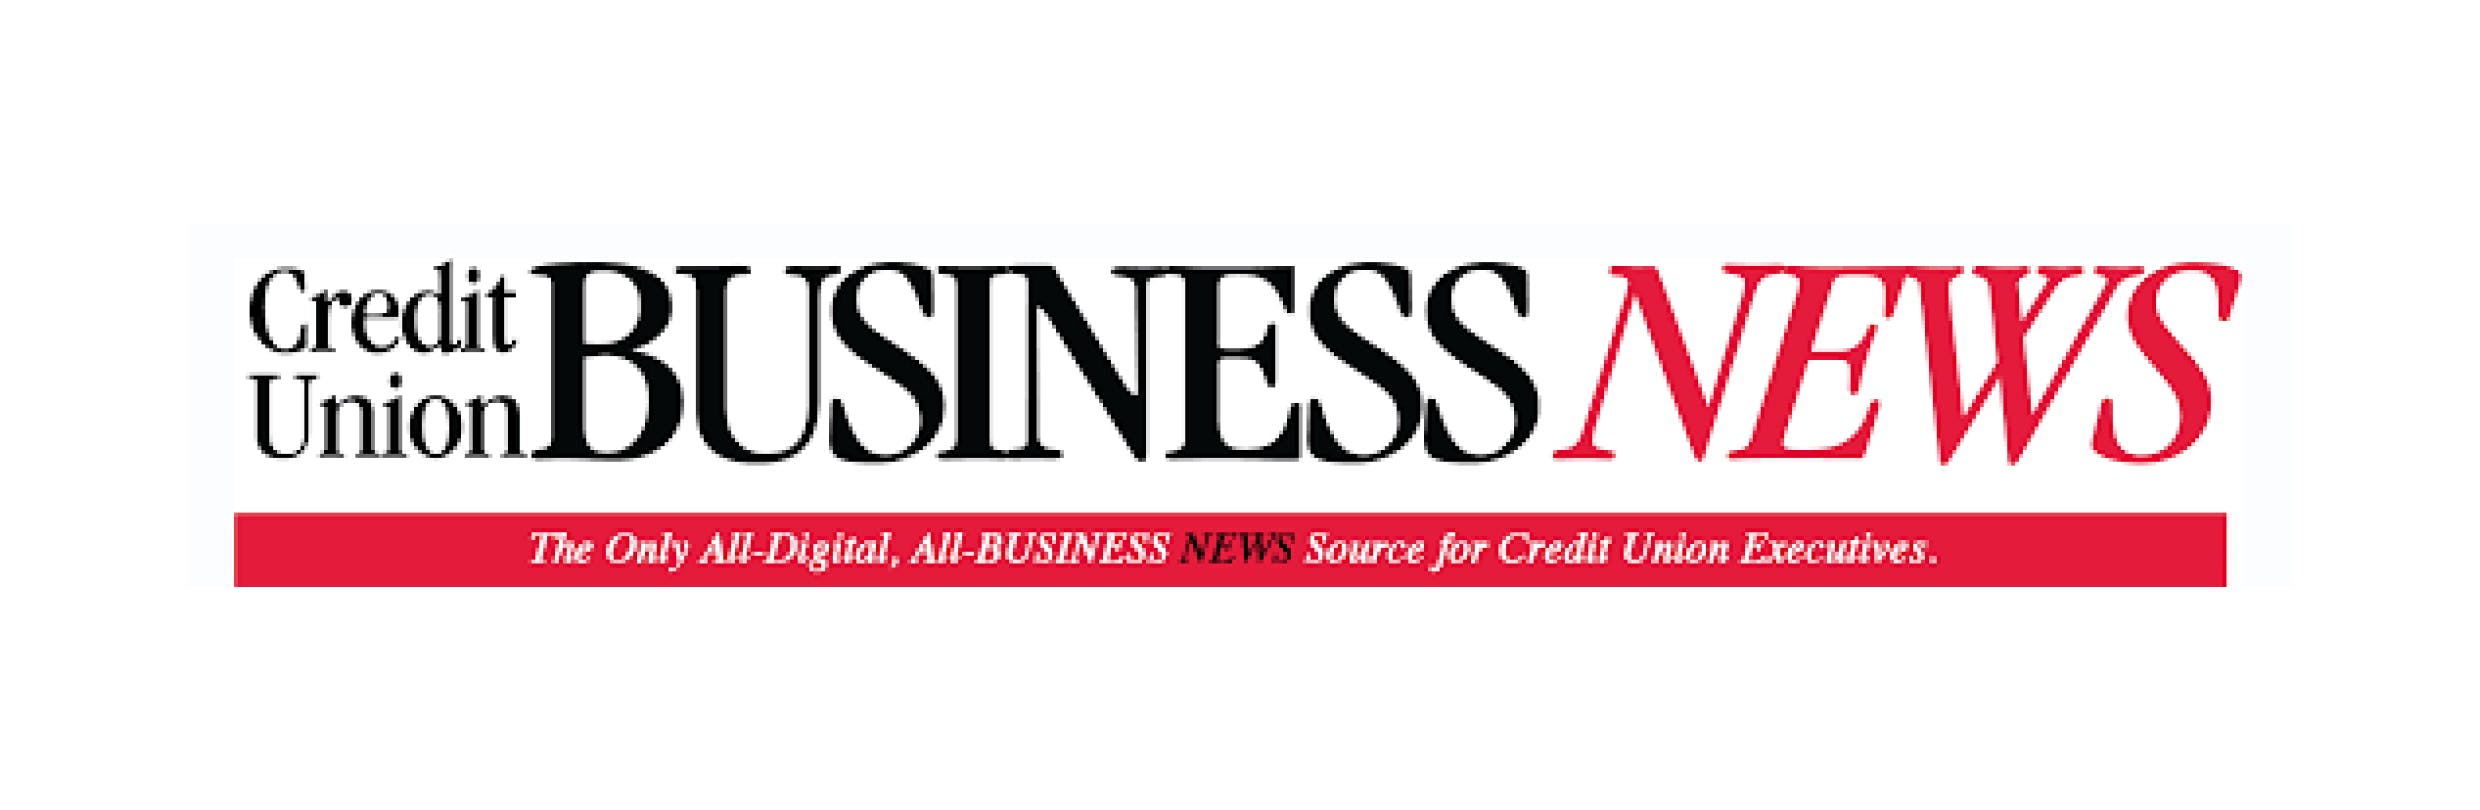 Credit Union Business News